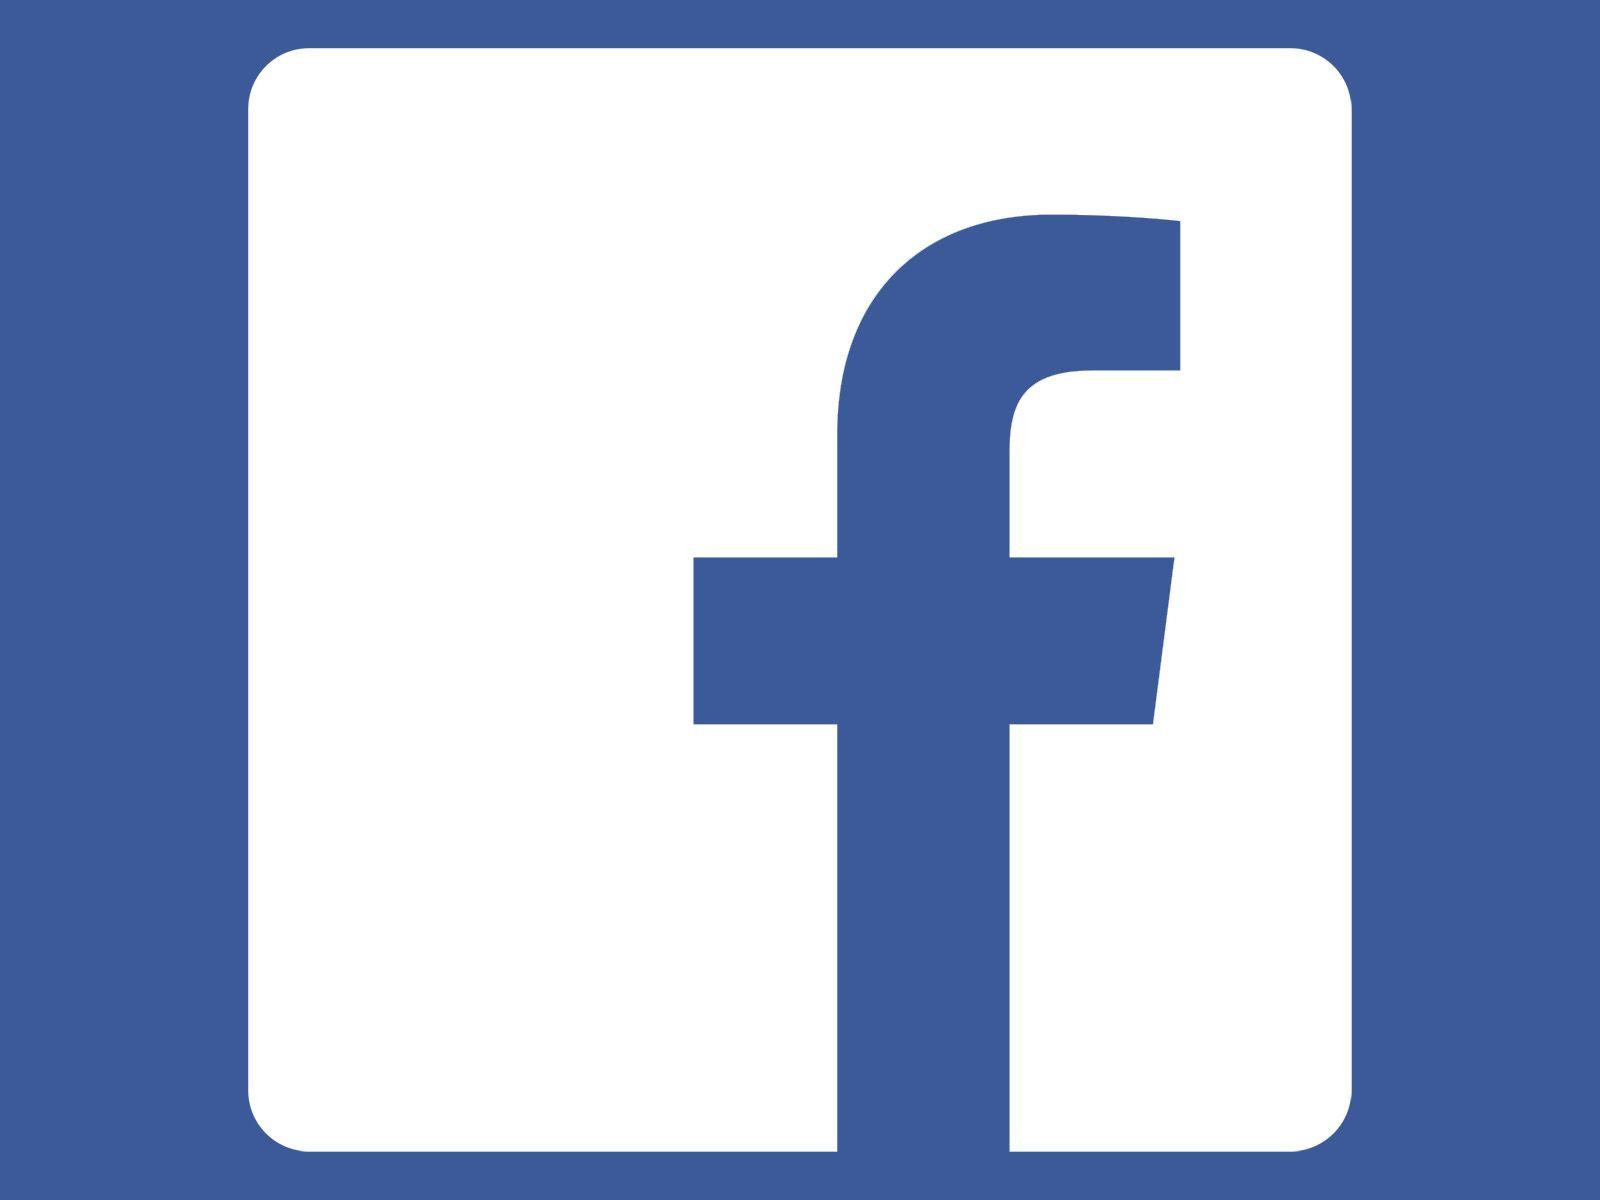 Faceboook Logo - Facebook Logo, FB symbol meaning, History and Evolution